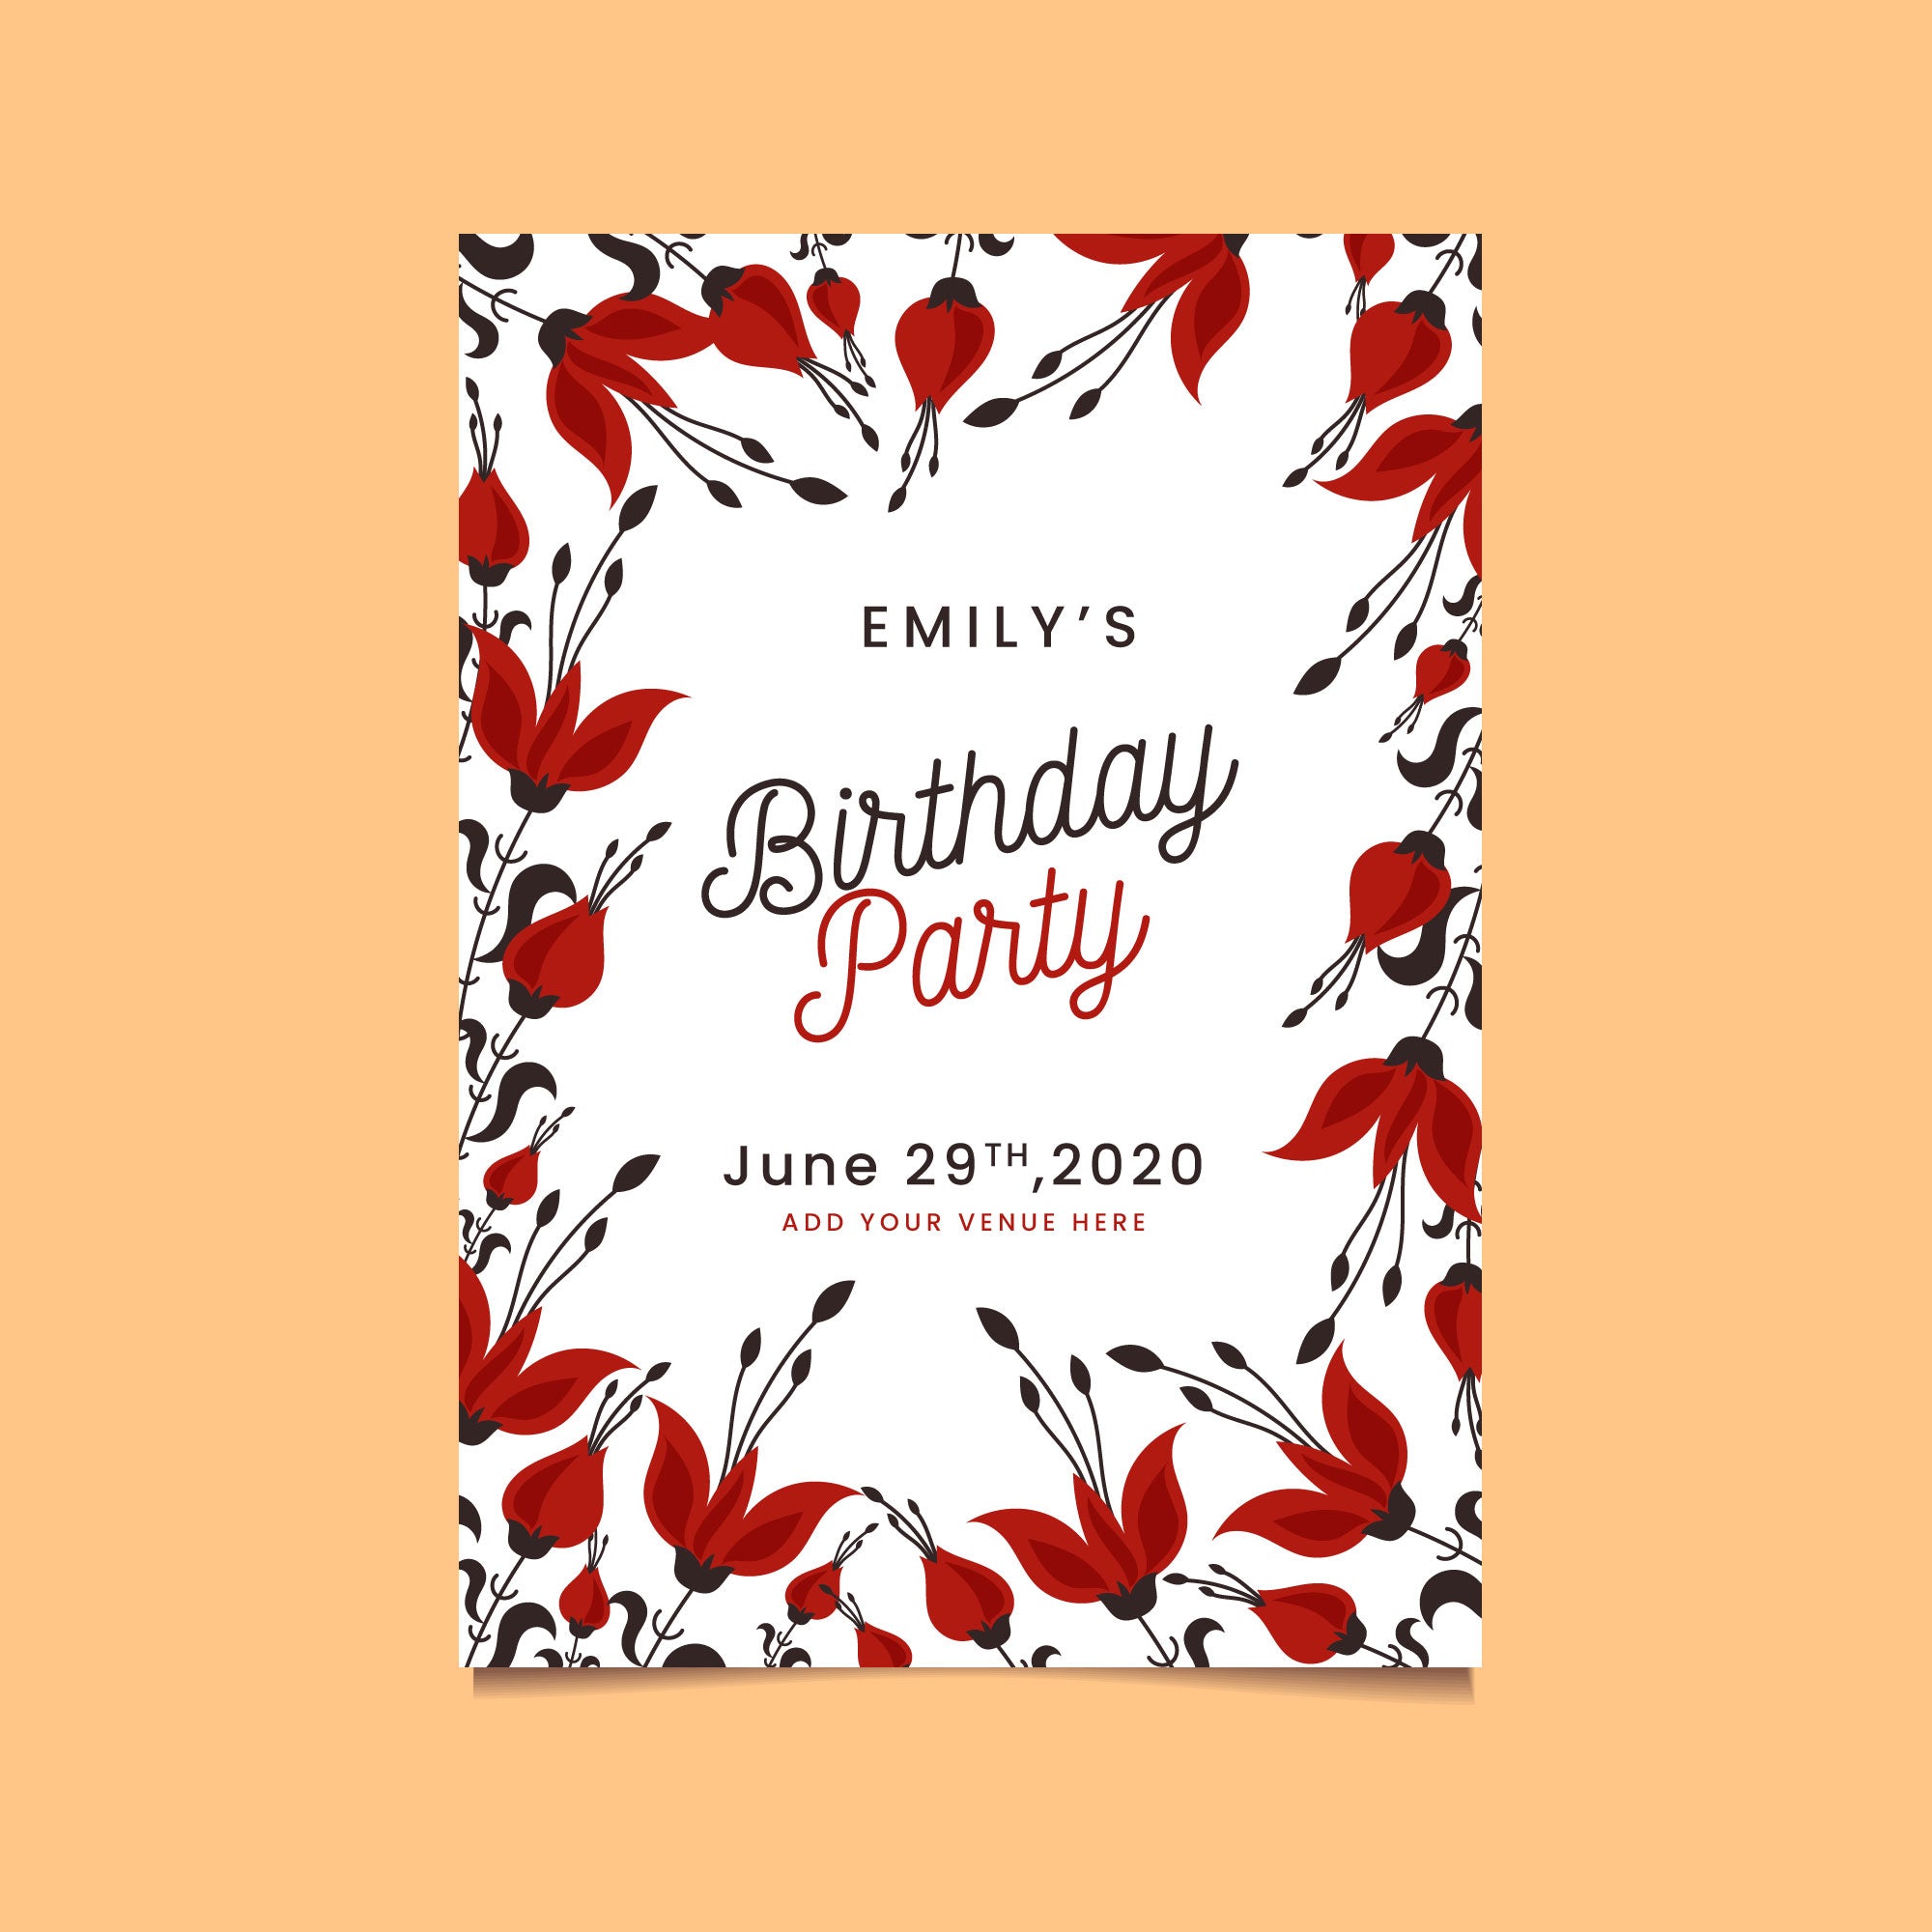 Plantable Scarlet Whisper Birthday Party Invitation Card